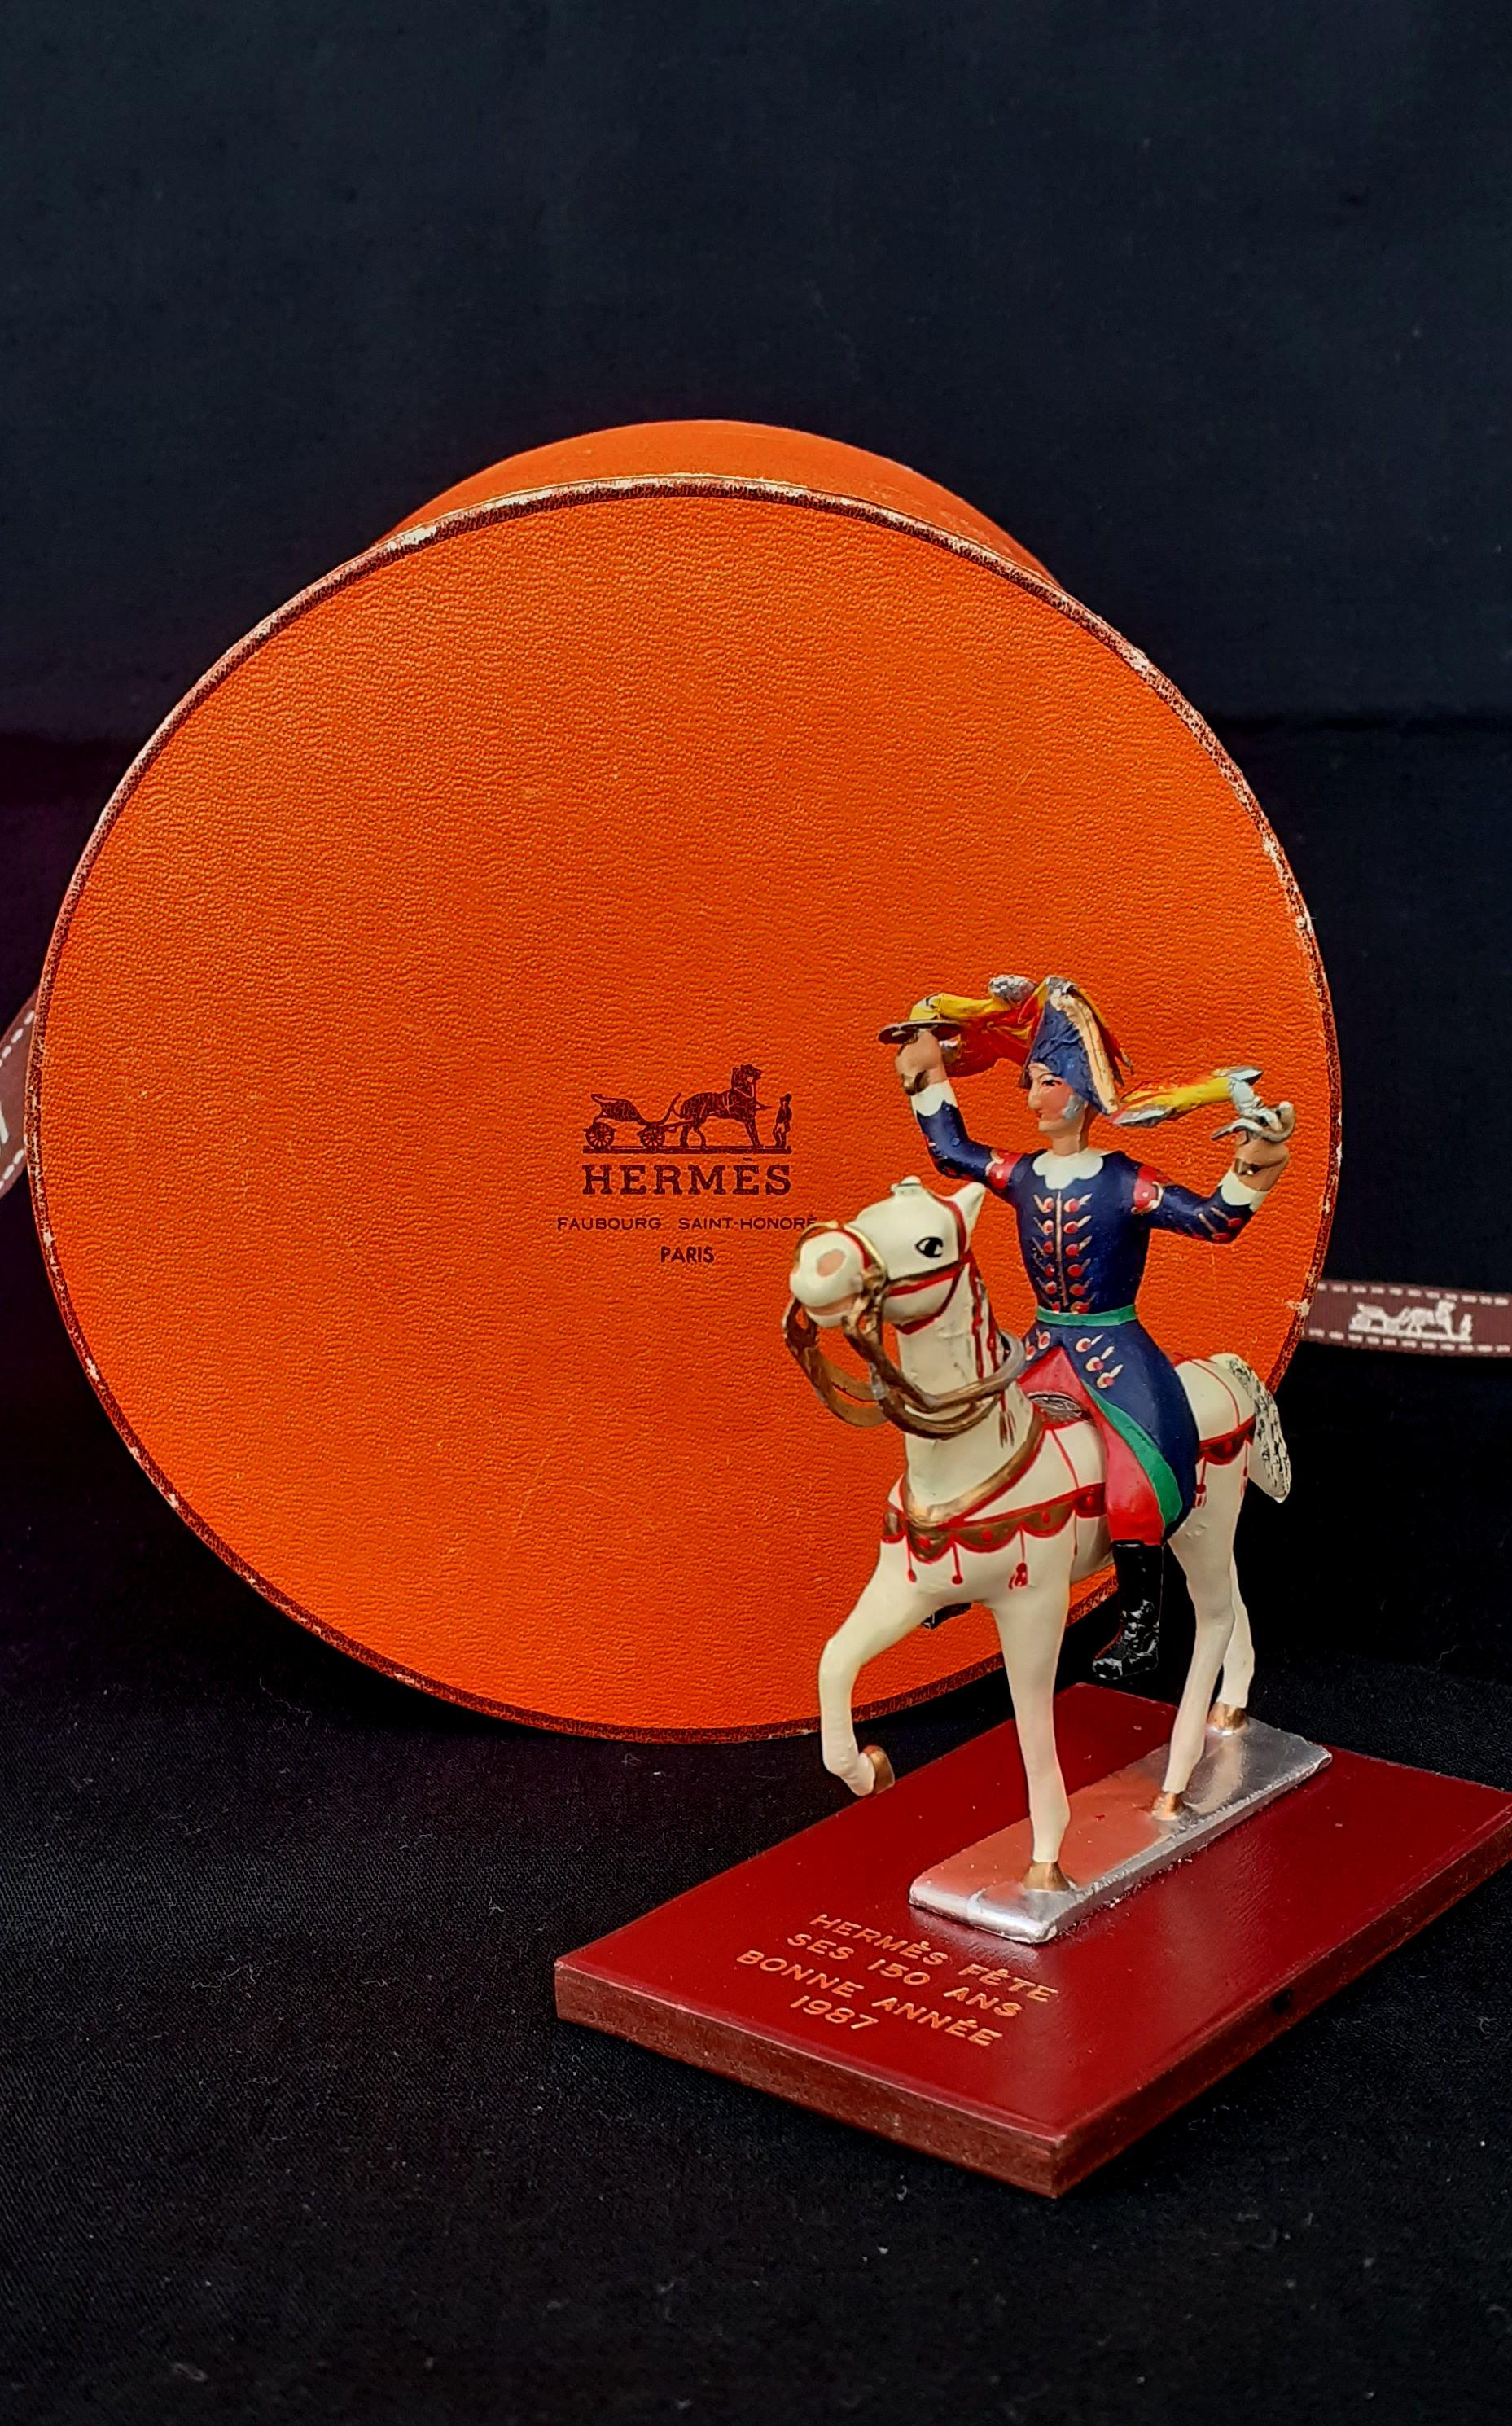 Hermès Hermès celebrates its 150th anniversary Figurine Rider Horse 1837-1987 For Sale 4